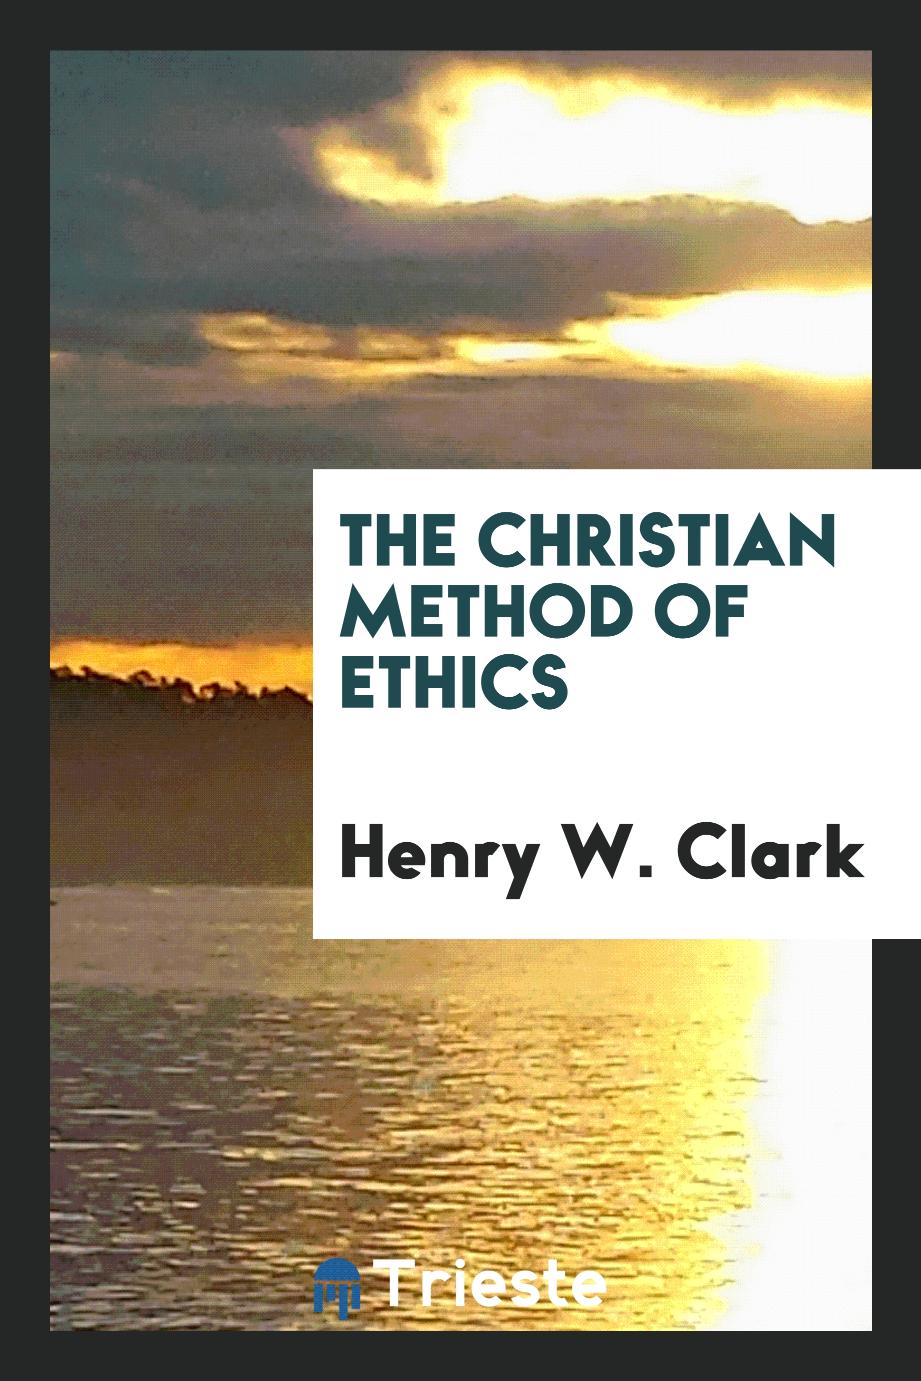 The Christian method of ethics